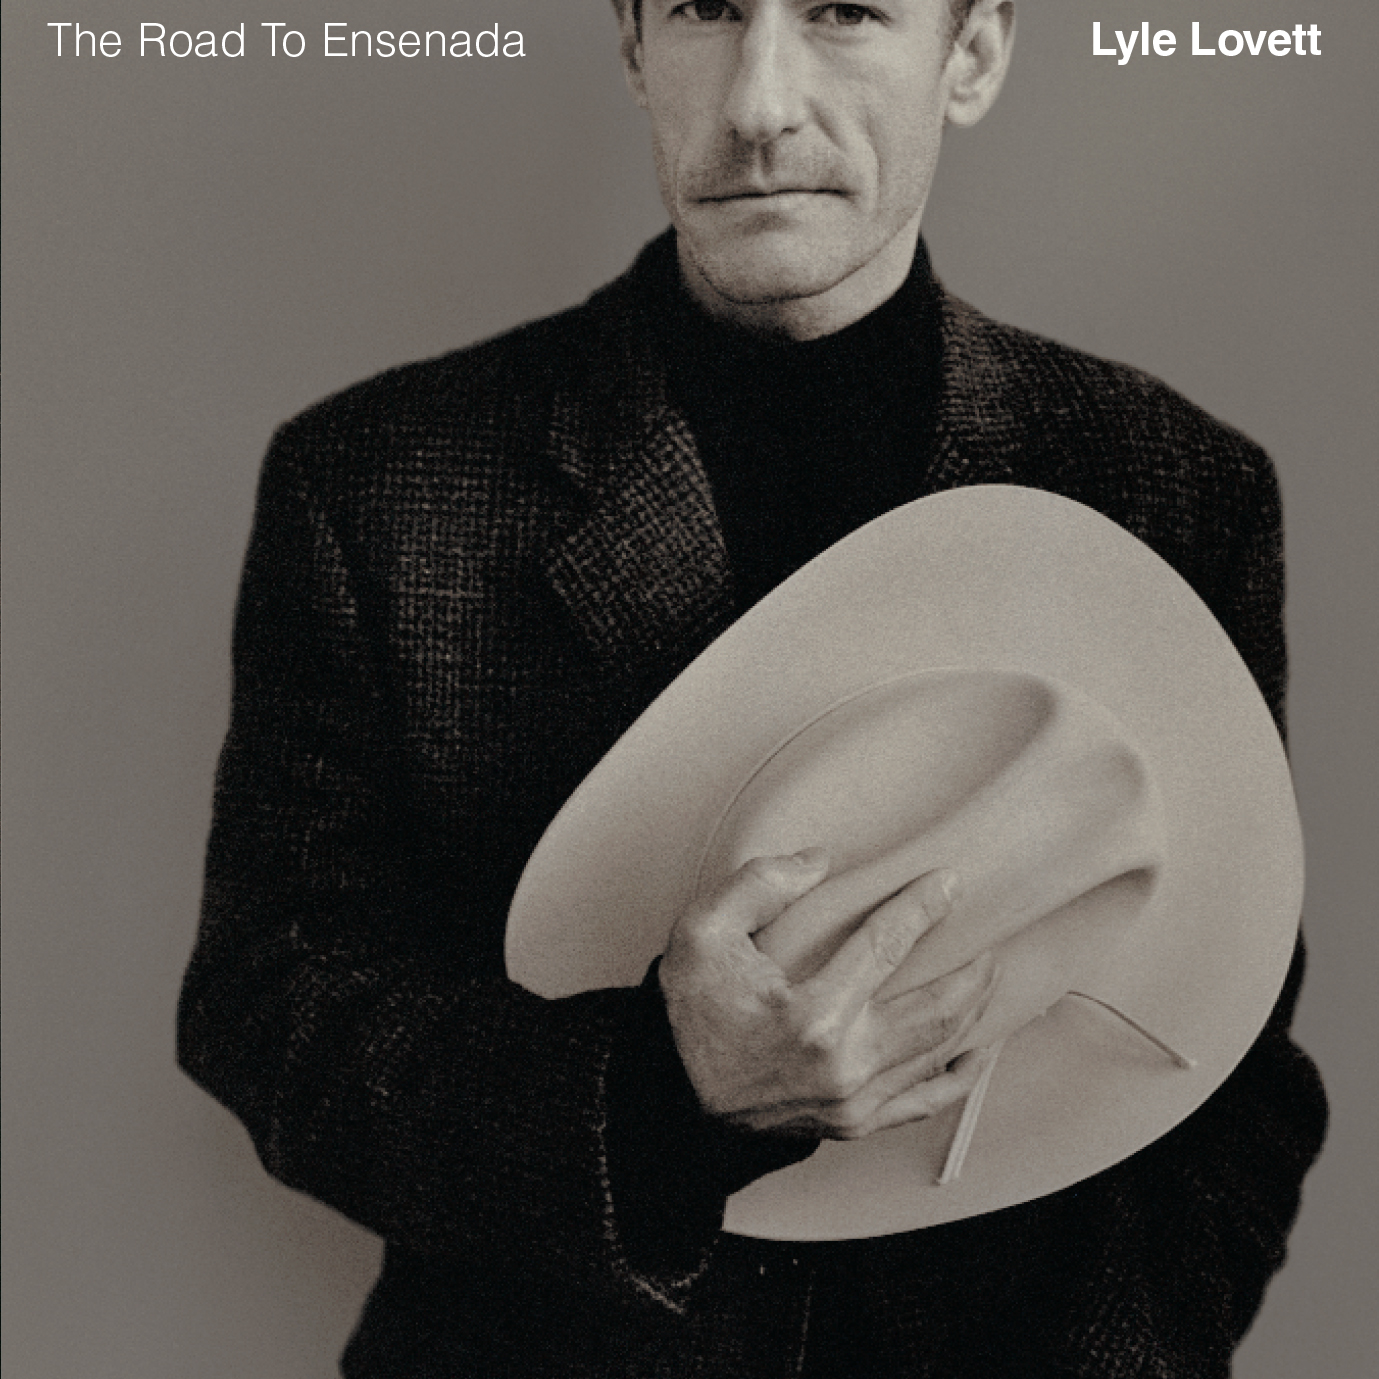 1996: Lyle Lovett, The Road To Ensenada